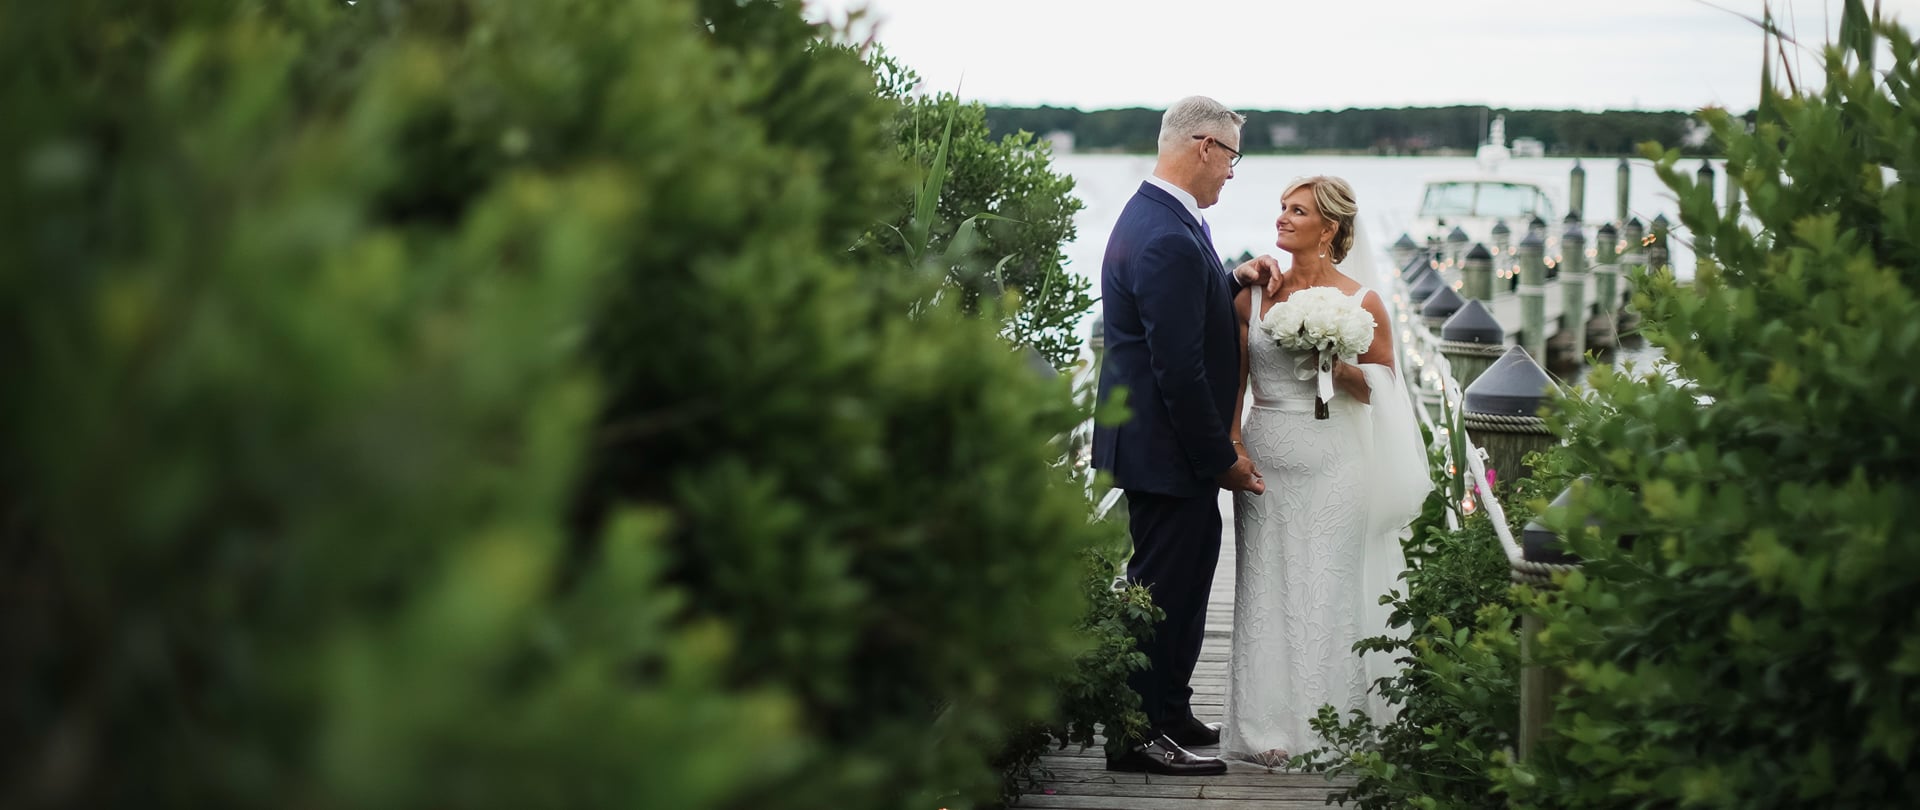 Diane & Brian Wedding Video Filmed at Cape Cod, Massachusetts